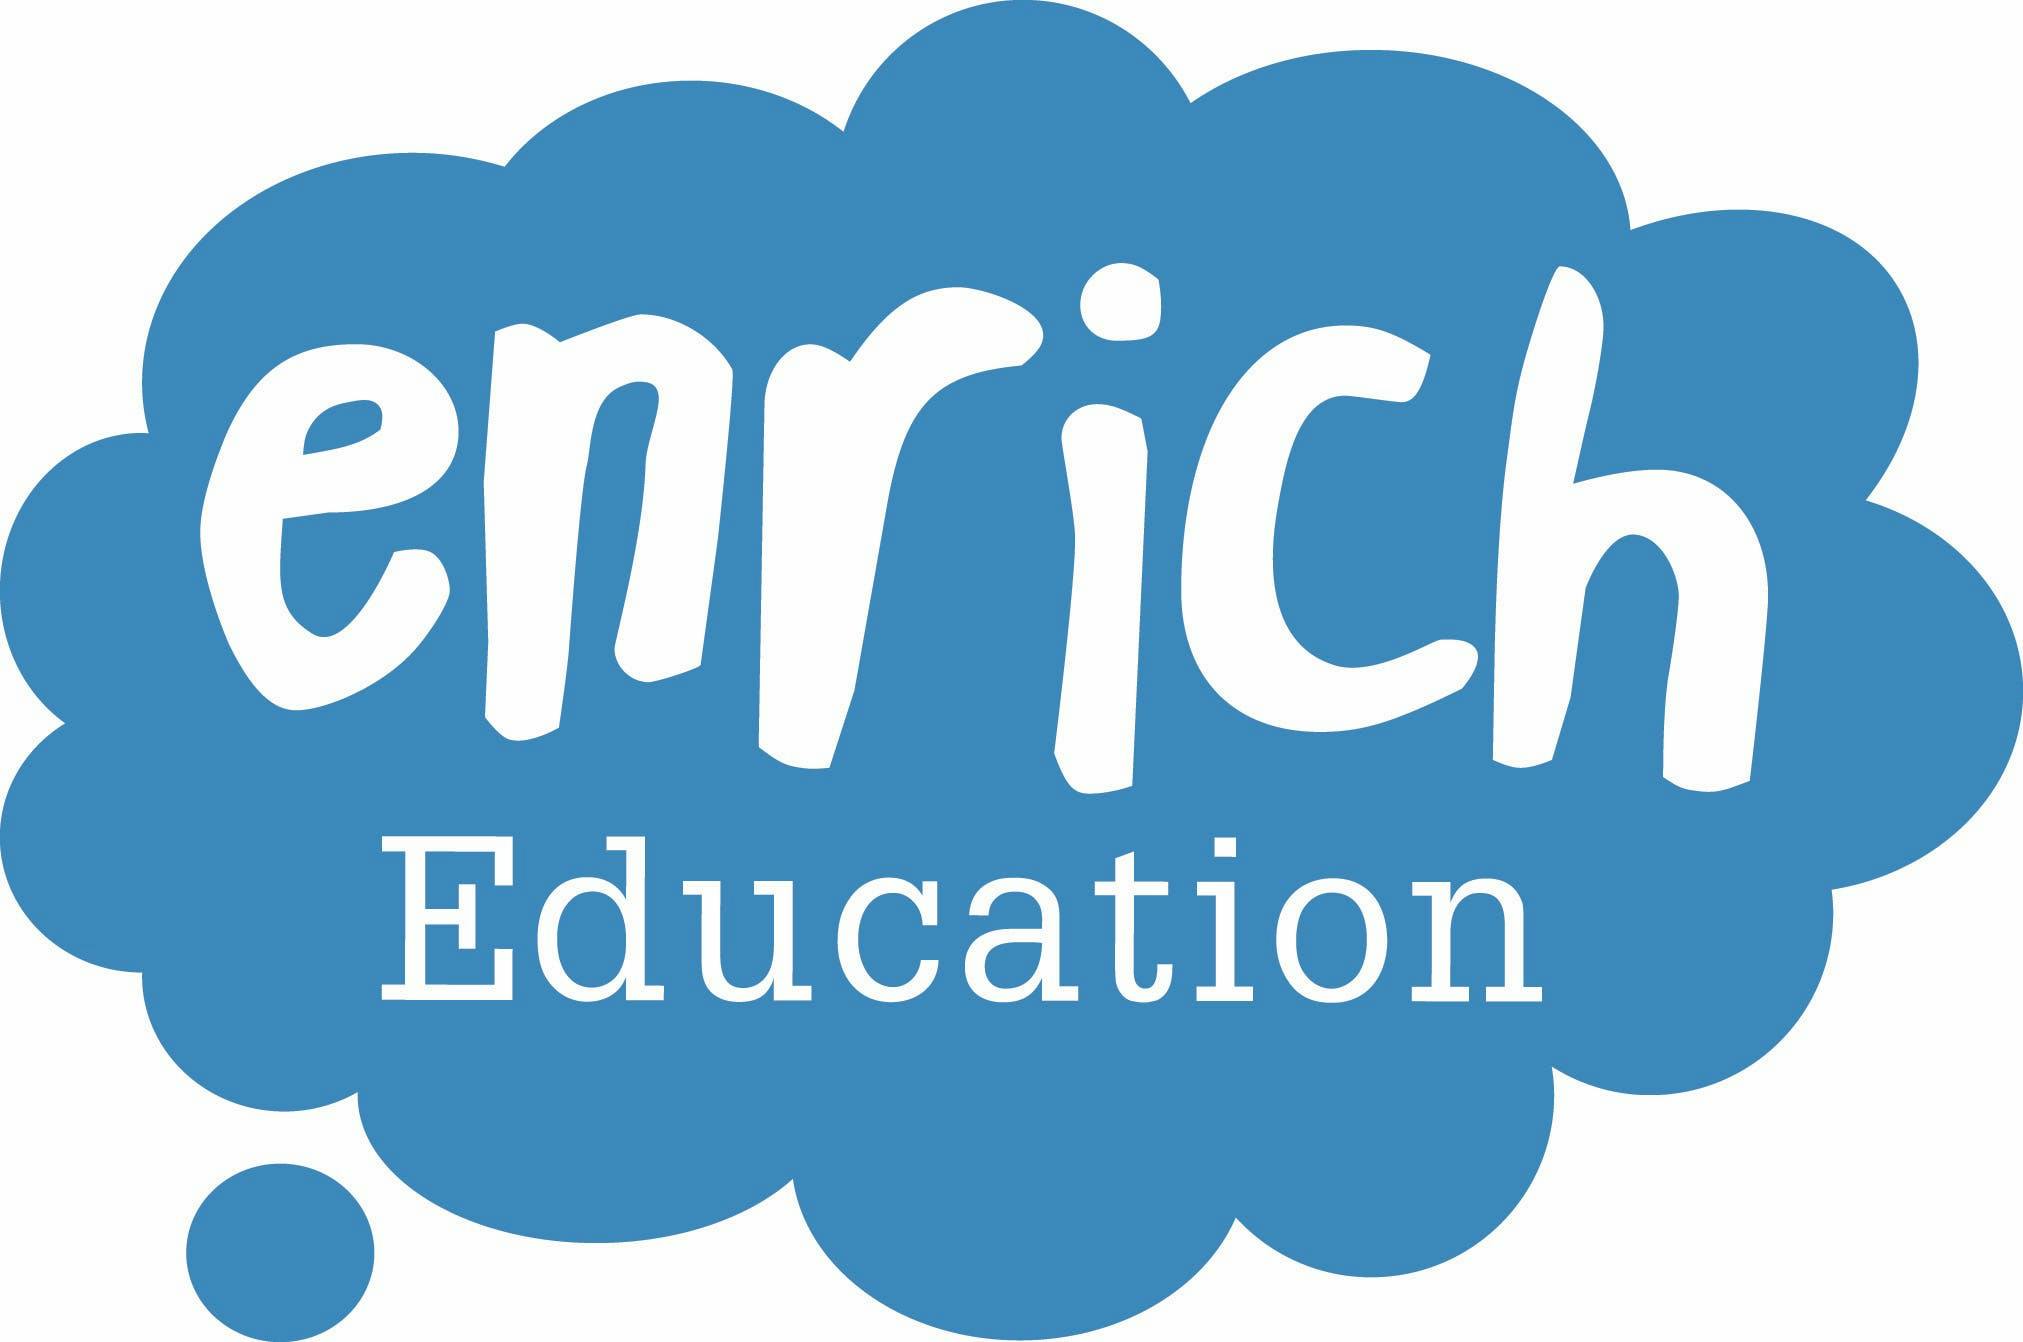 Youth Quidditch Partner Logo - Enrich Education